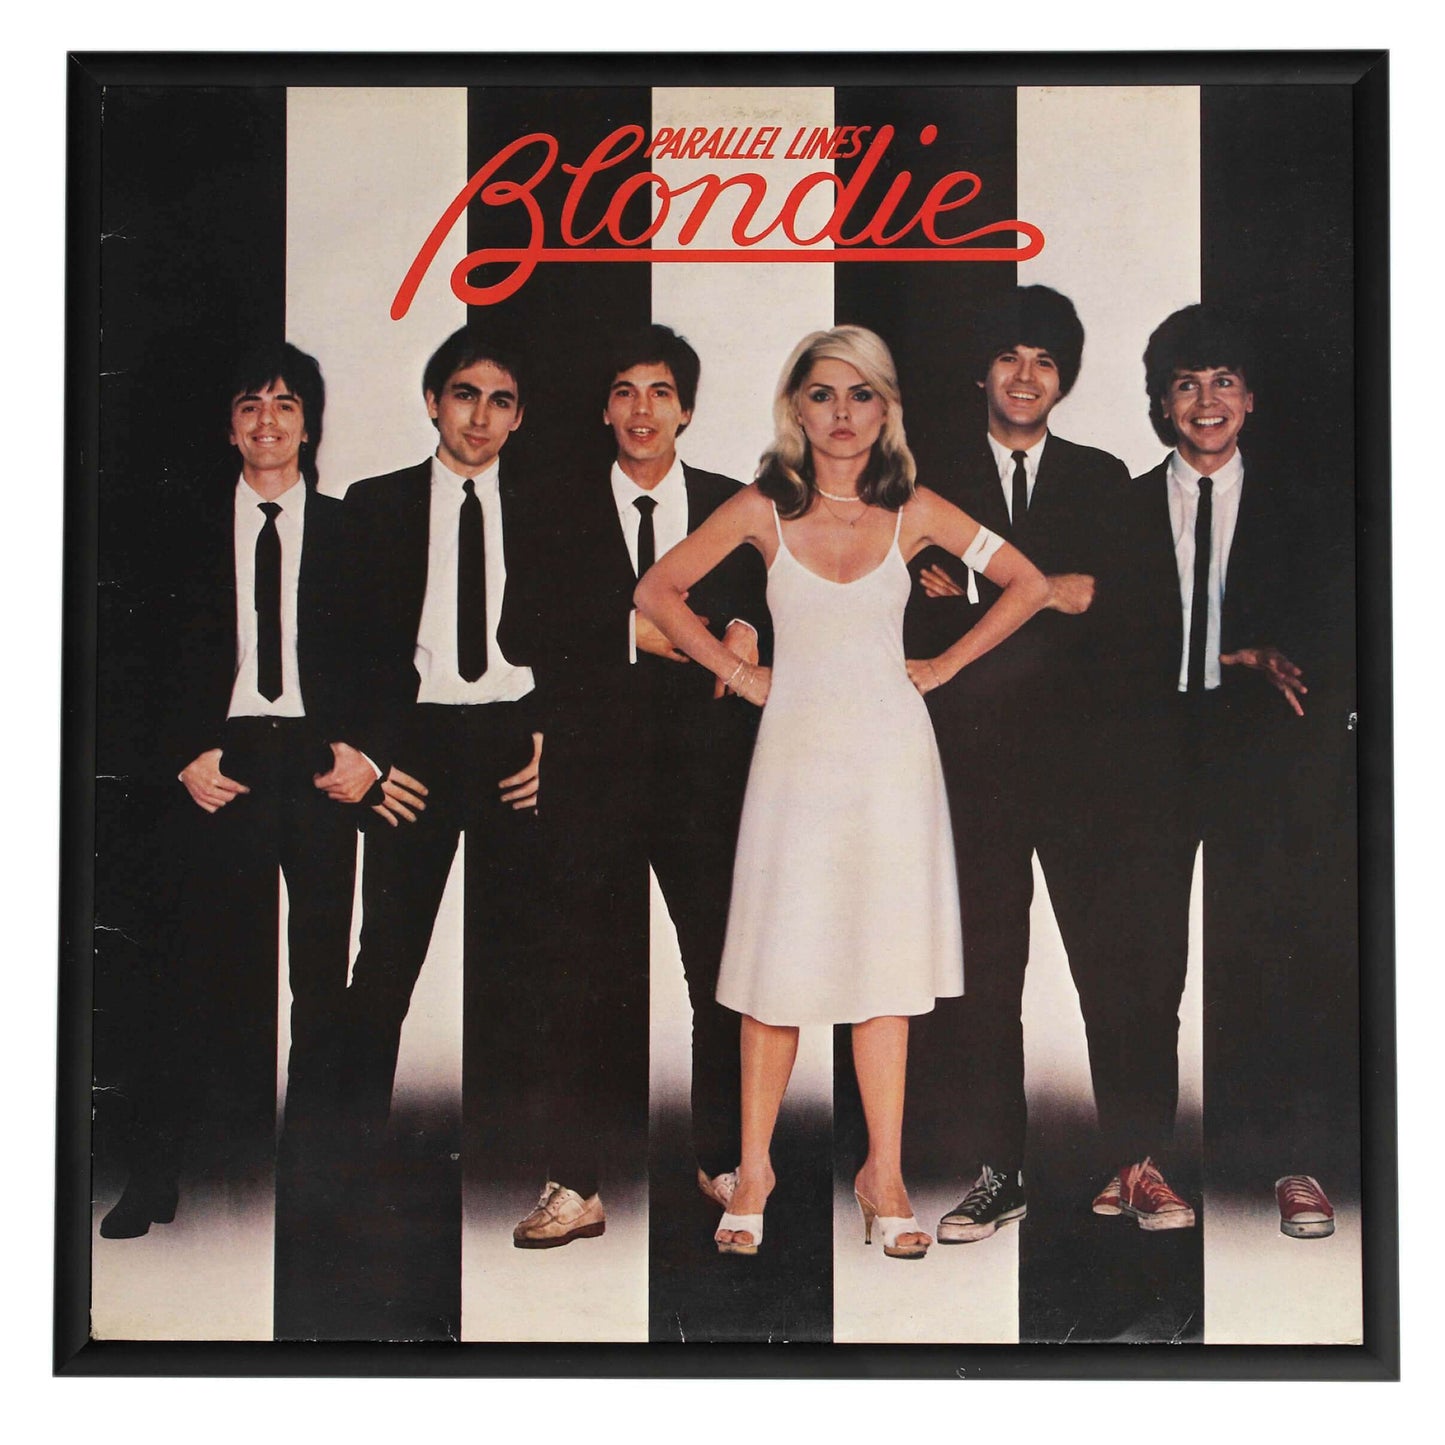 Record Cover Frame - Black